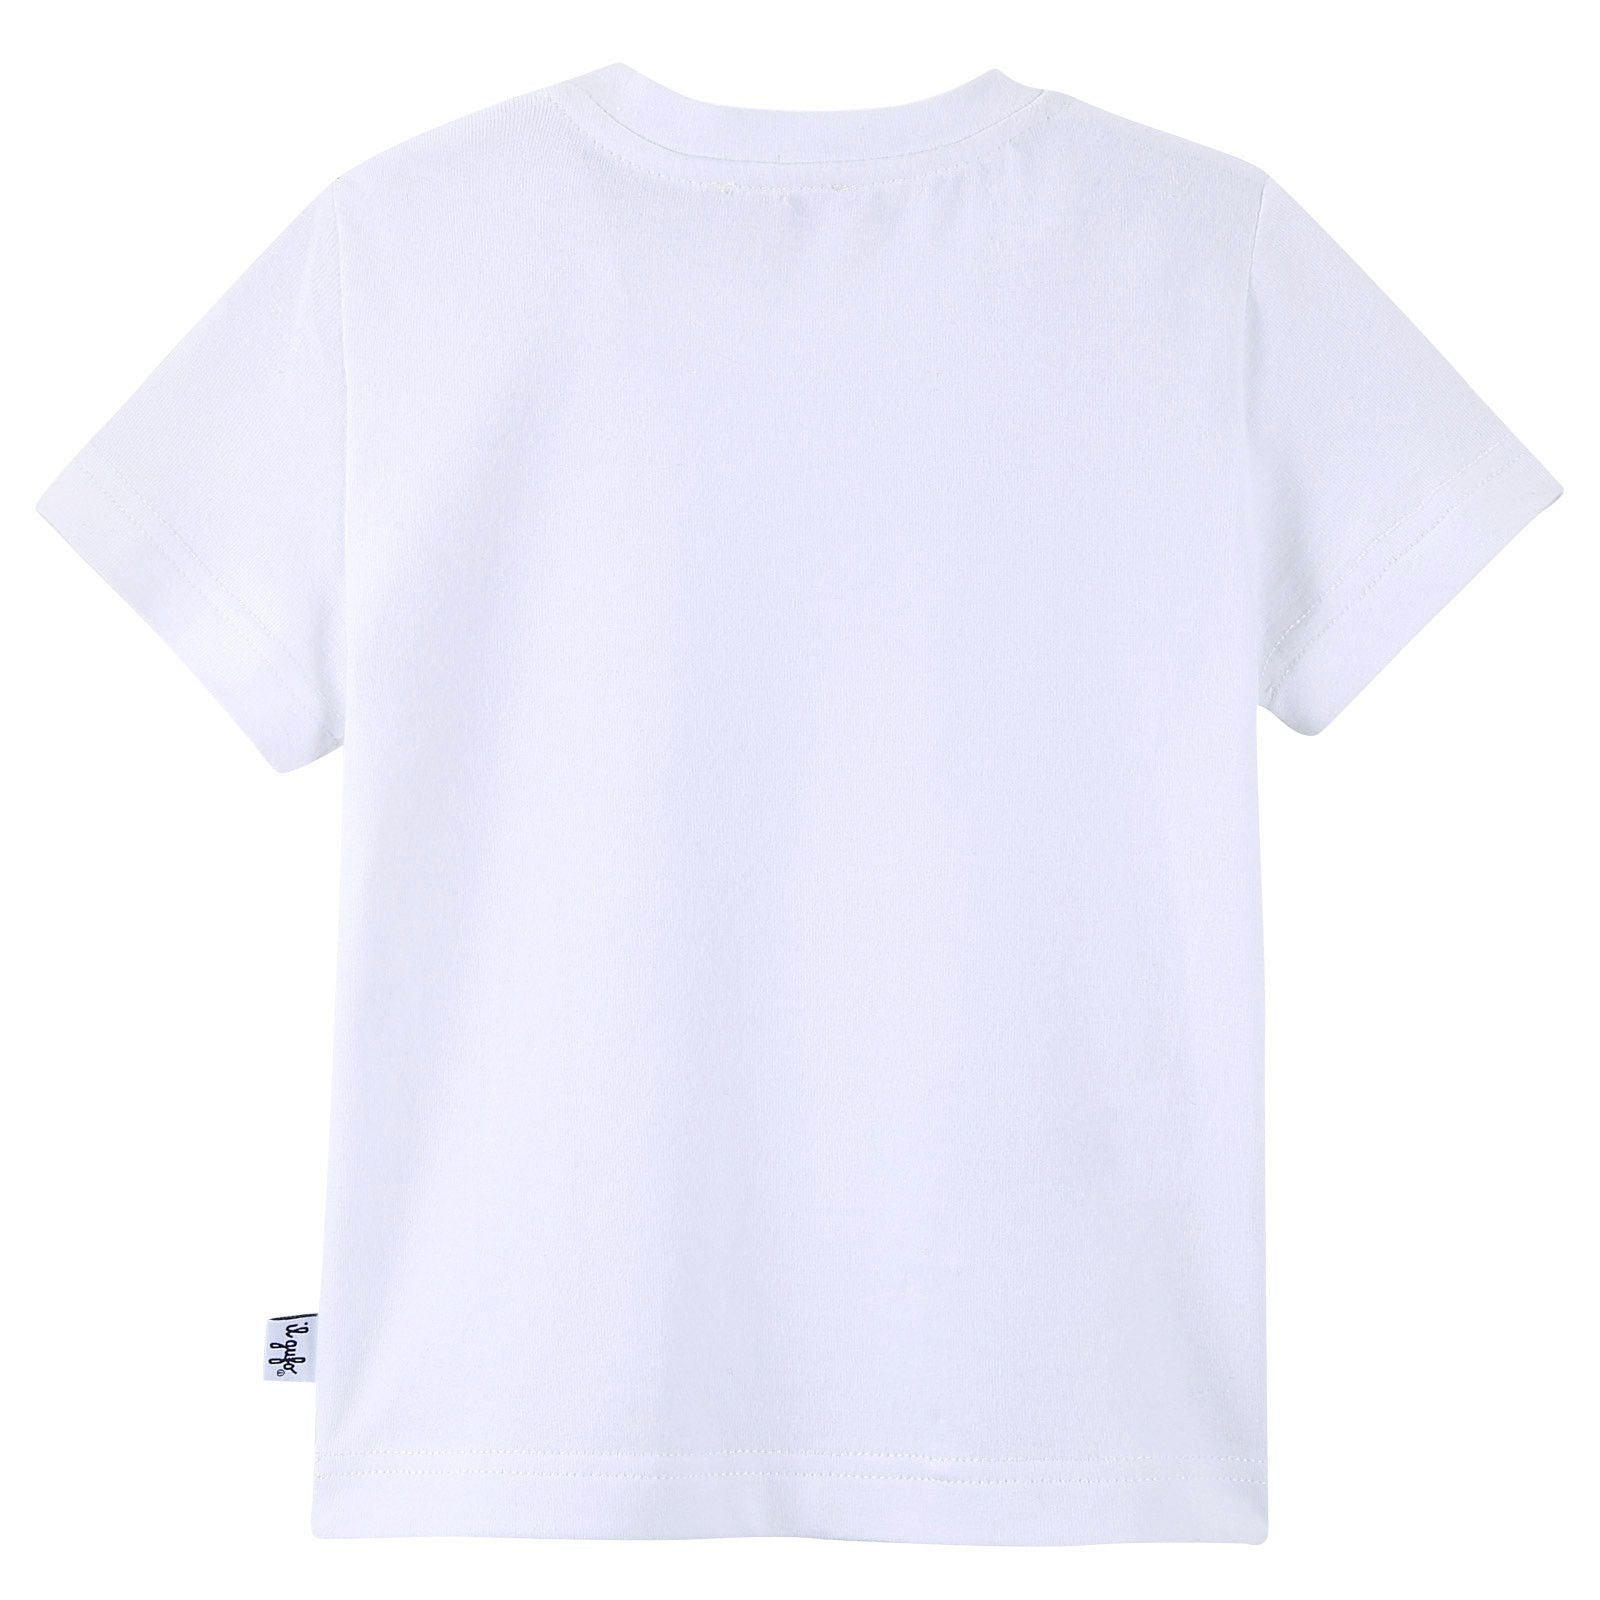 Baby Boys White T-Shirt With Navy Blue Bus Print - CÉMAROSE | Children's Fashion Store - 2